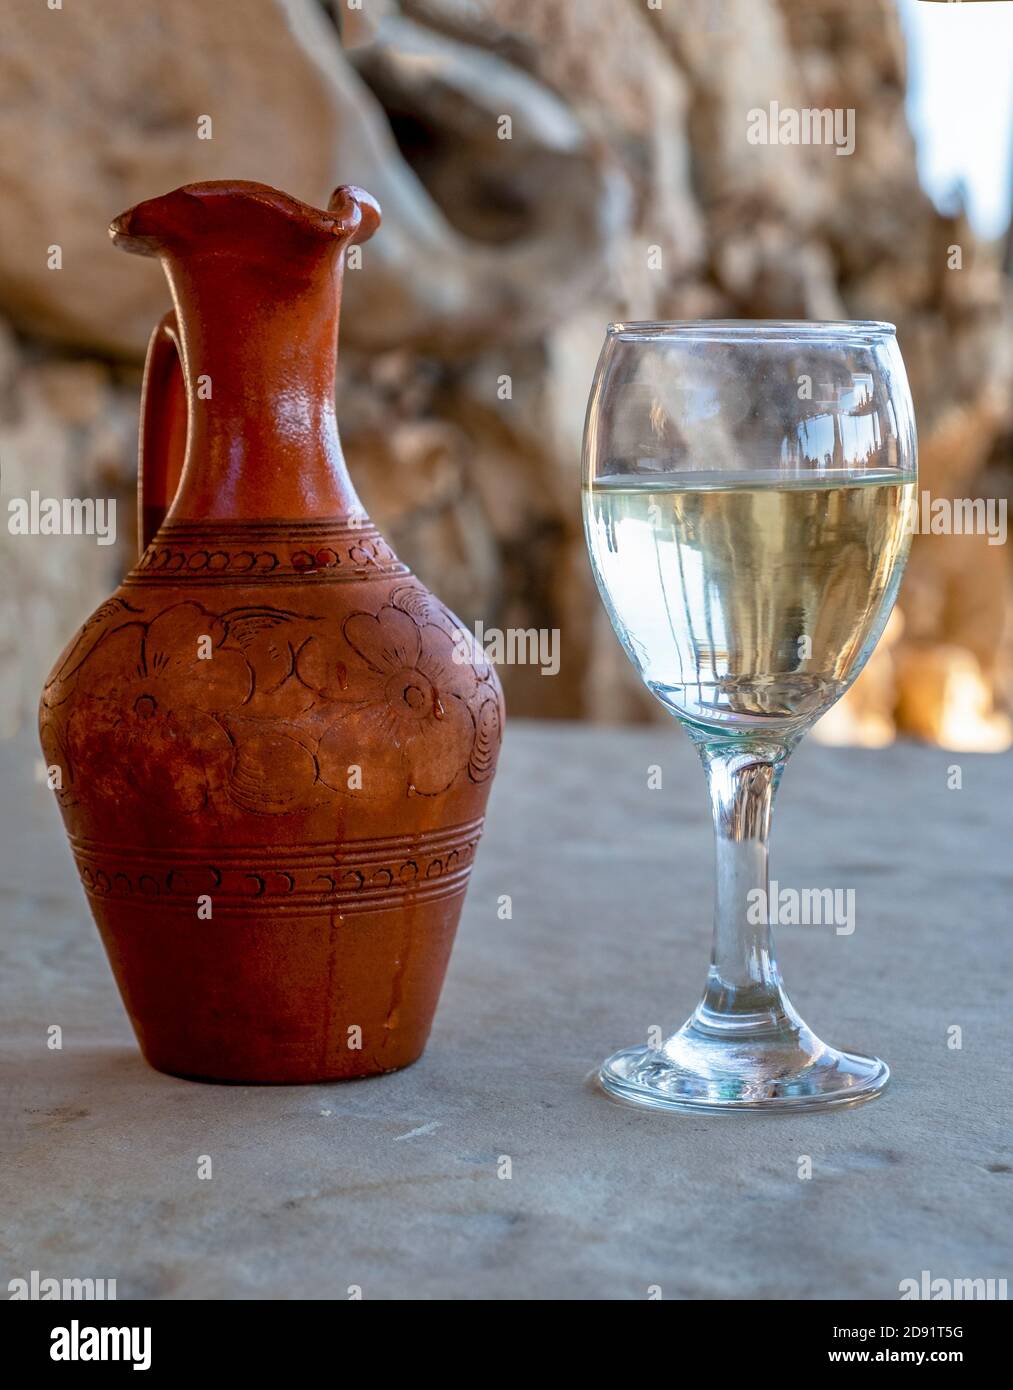 https://c8.alamy.com/comp/2D91T5G/carafe-and-glass-of-white-wine-last-castle-restaurant-paphos-cyprus-2D91T5G.jpg